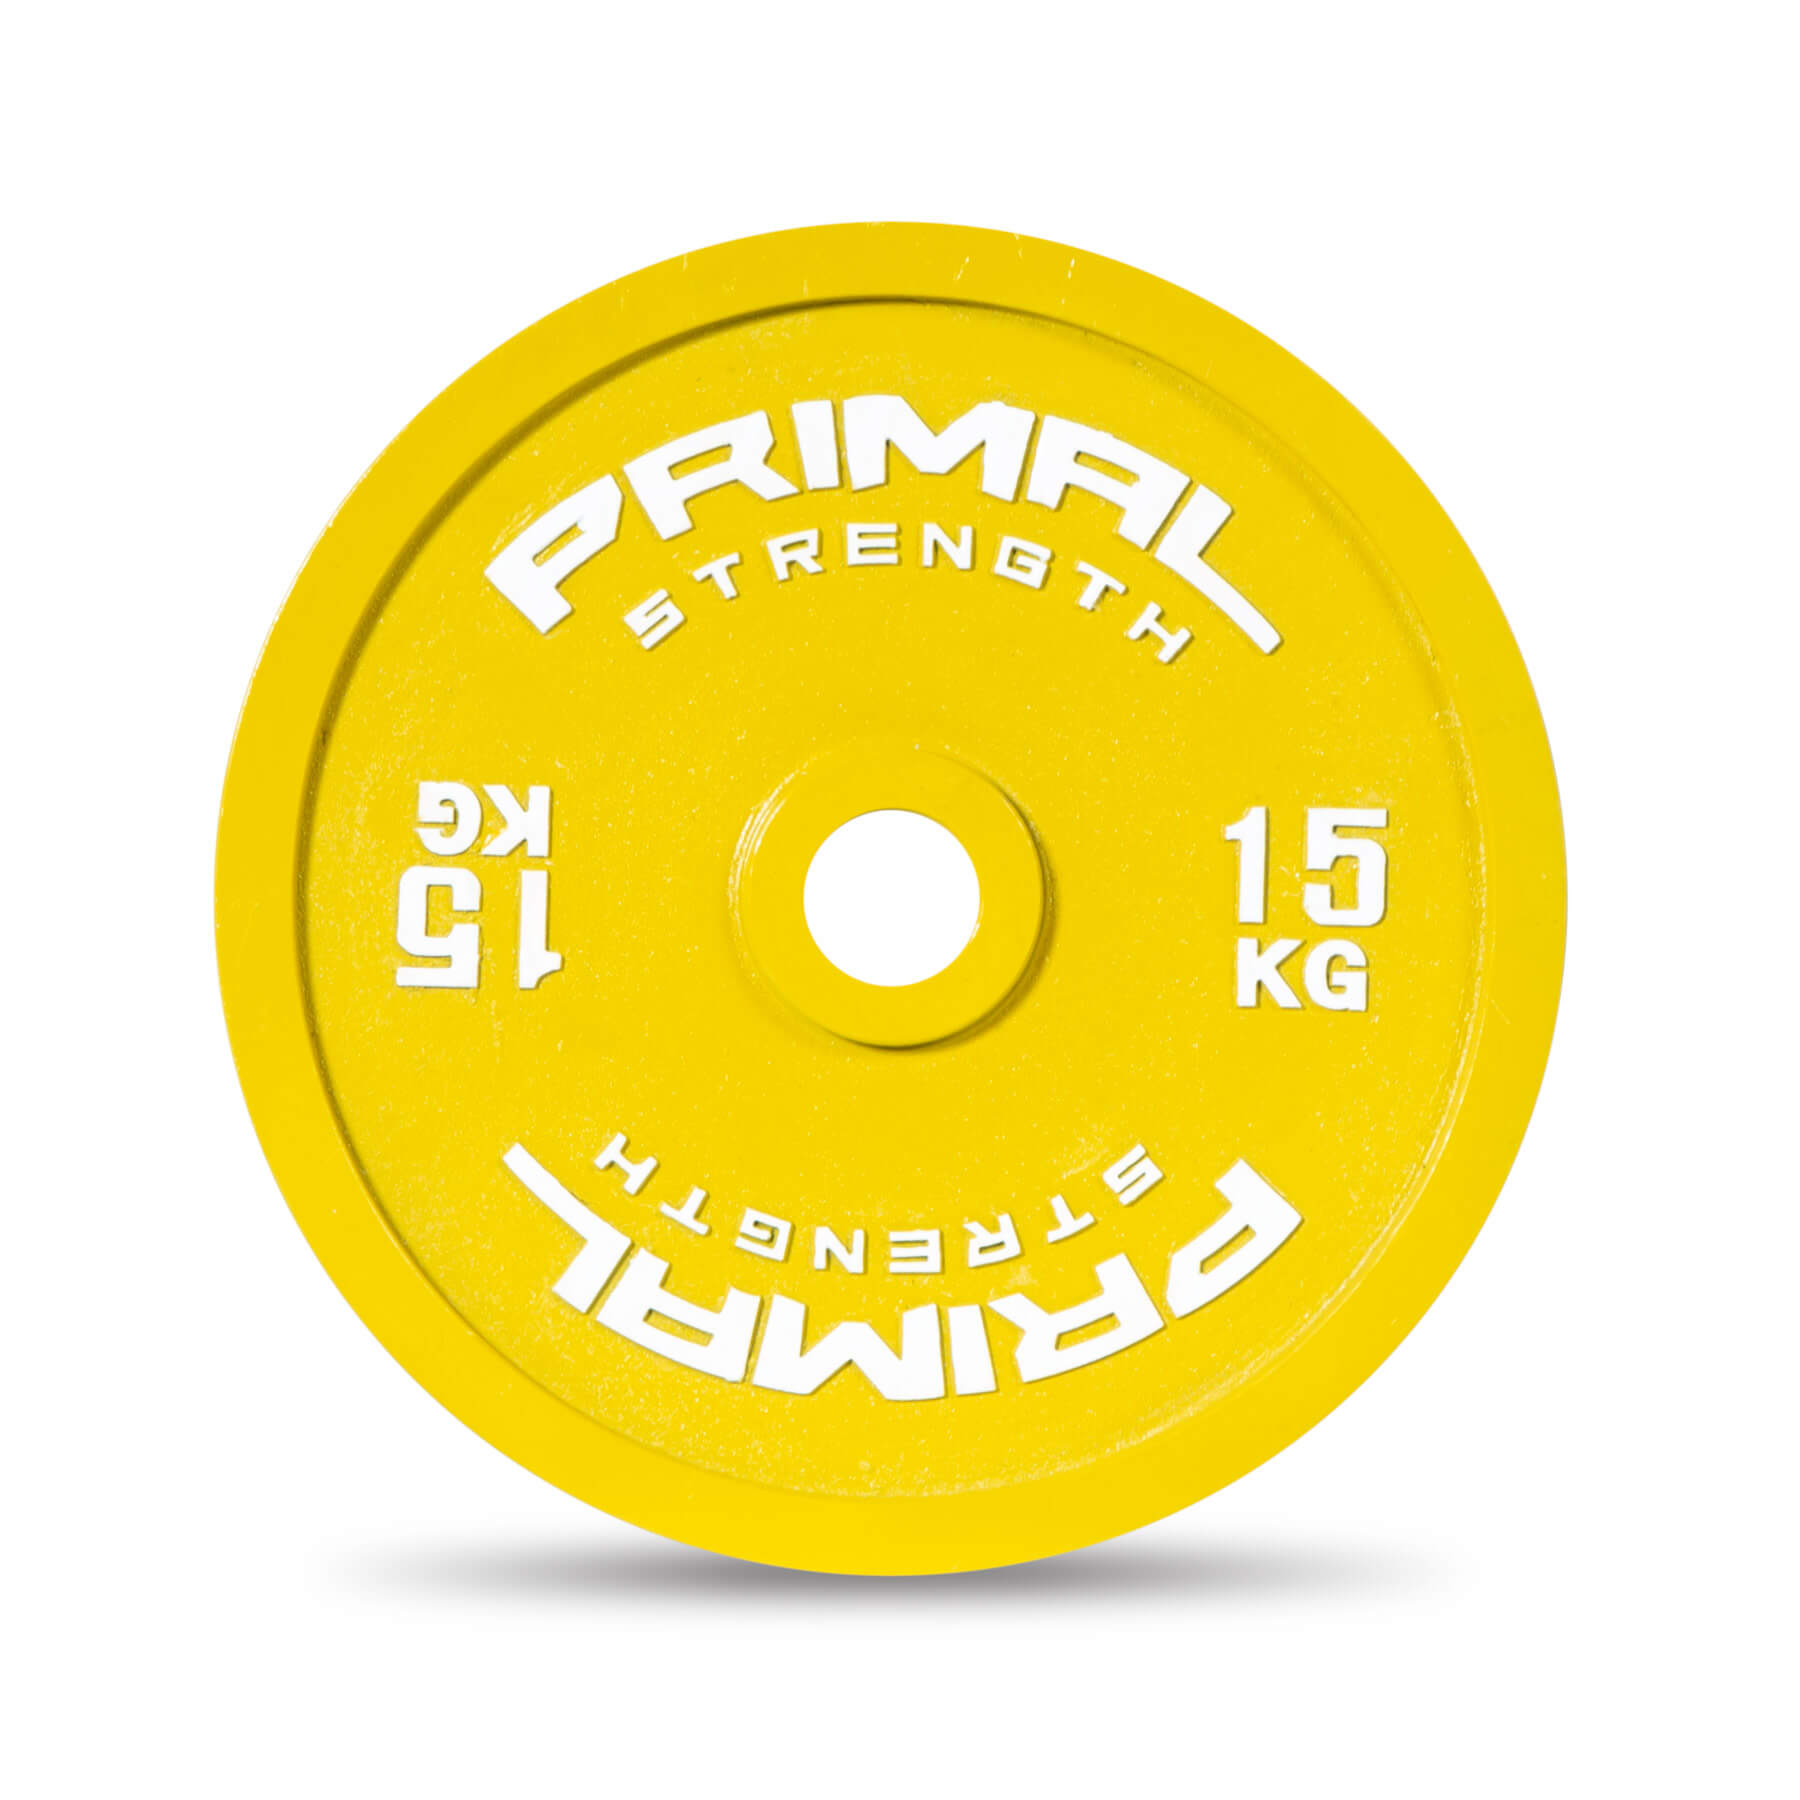 Primal Performance Series Calibrated Plates – Primal Strength